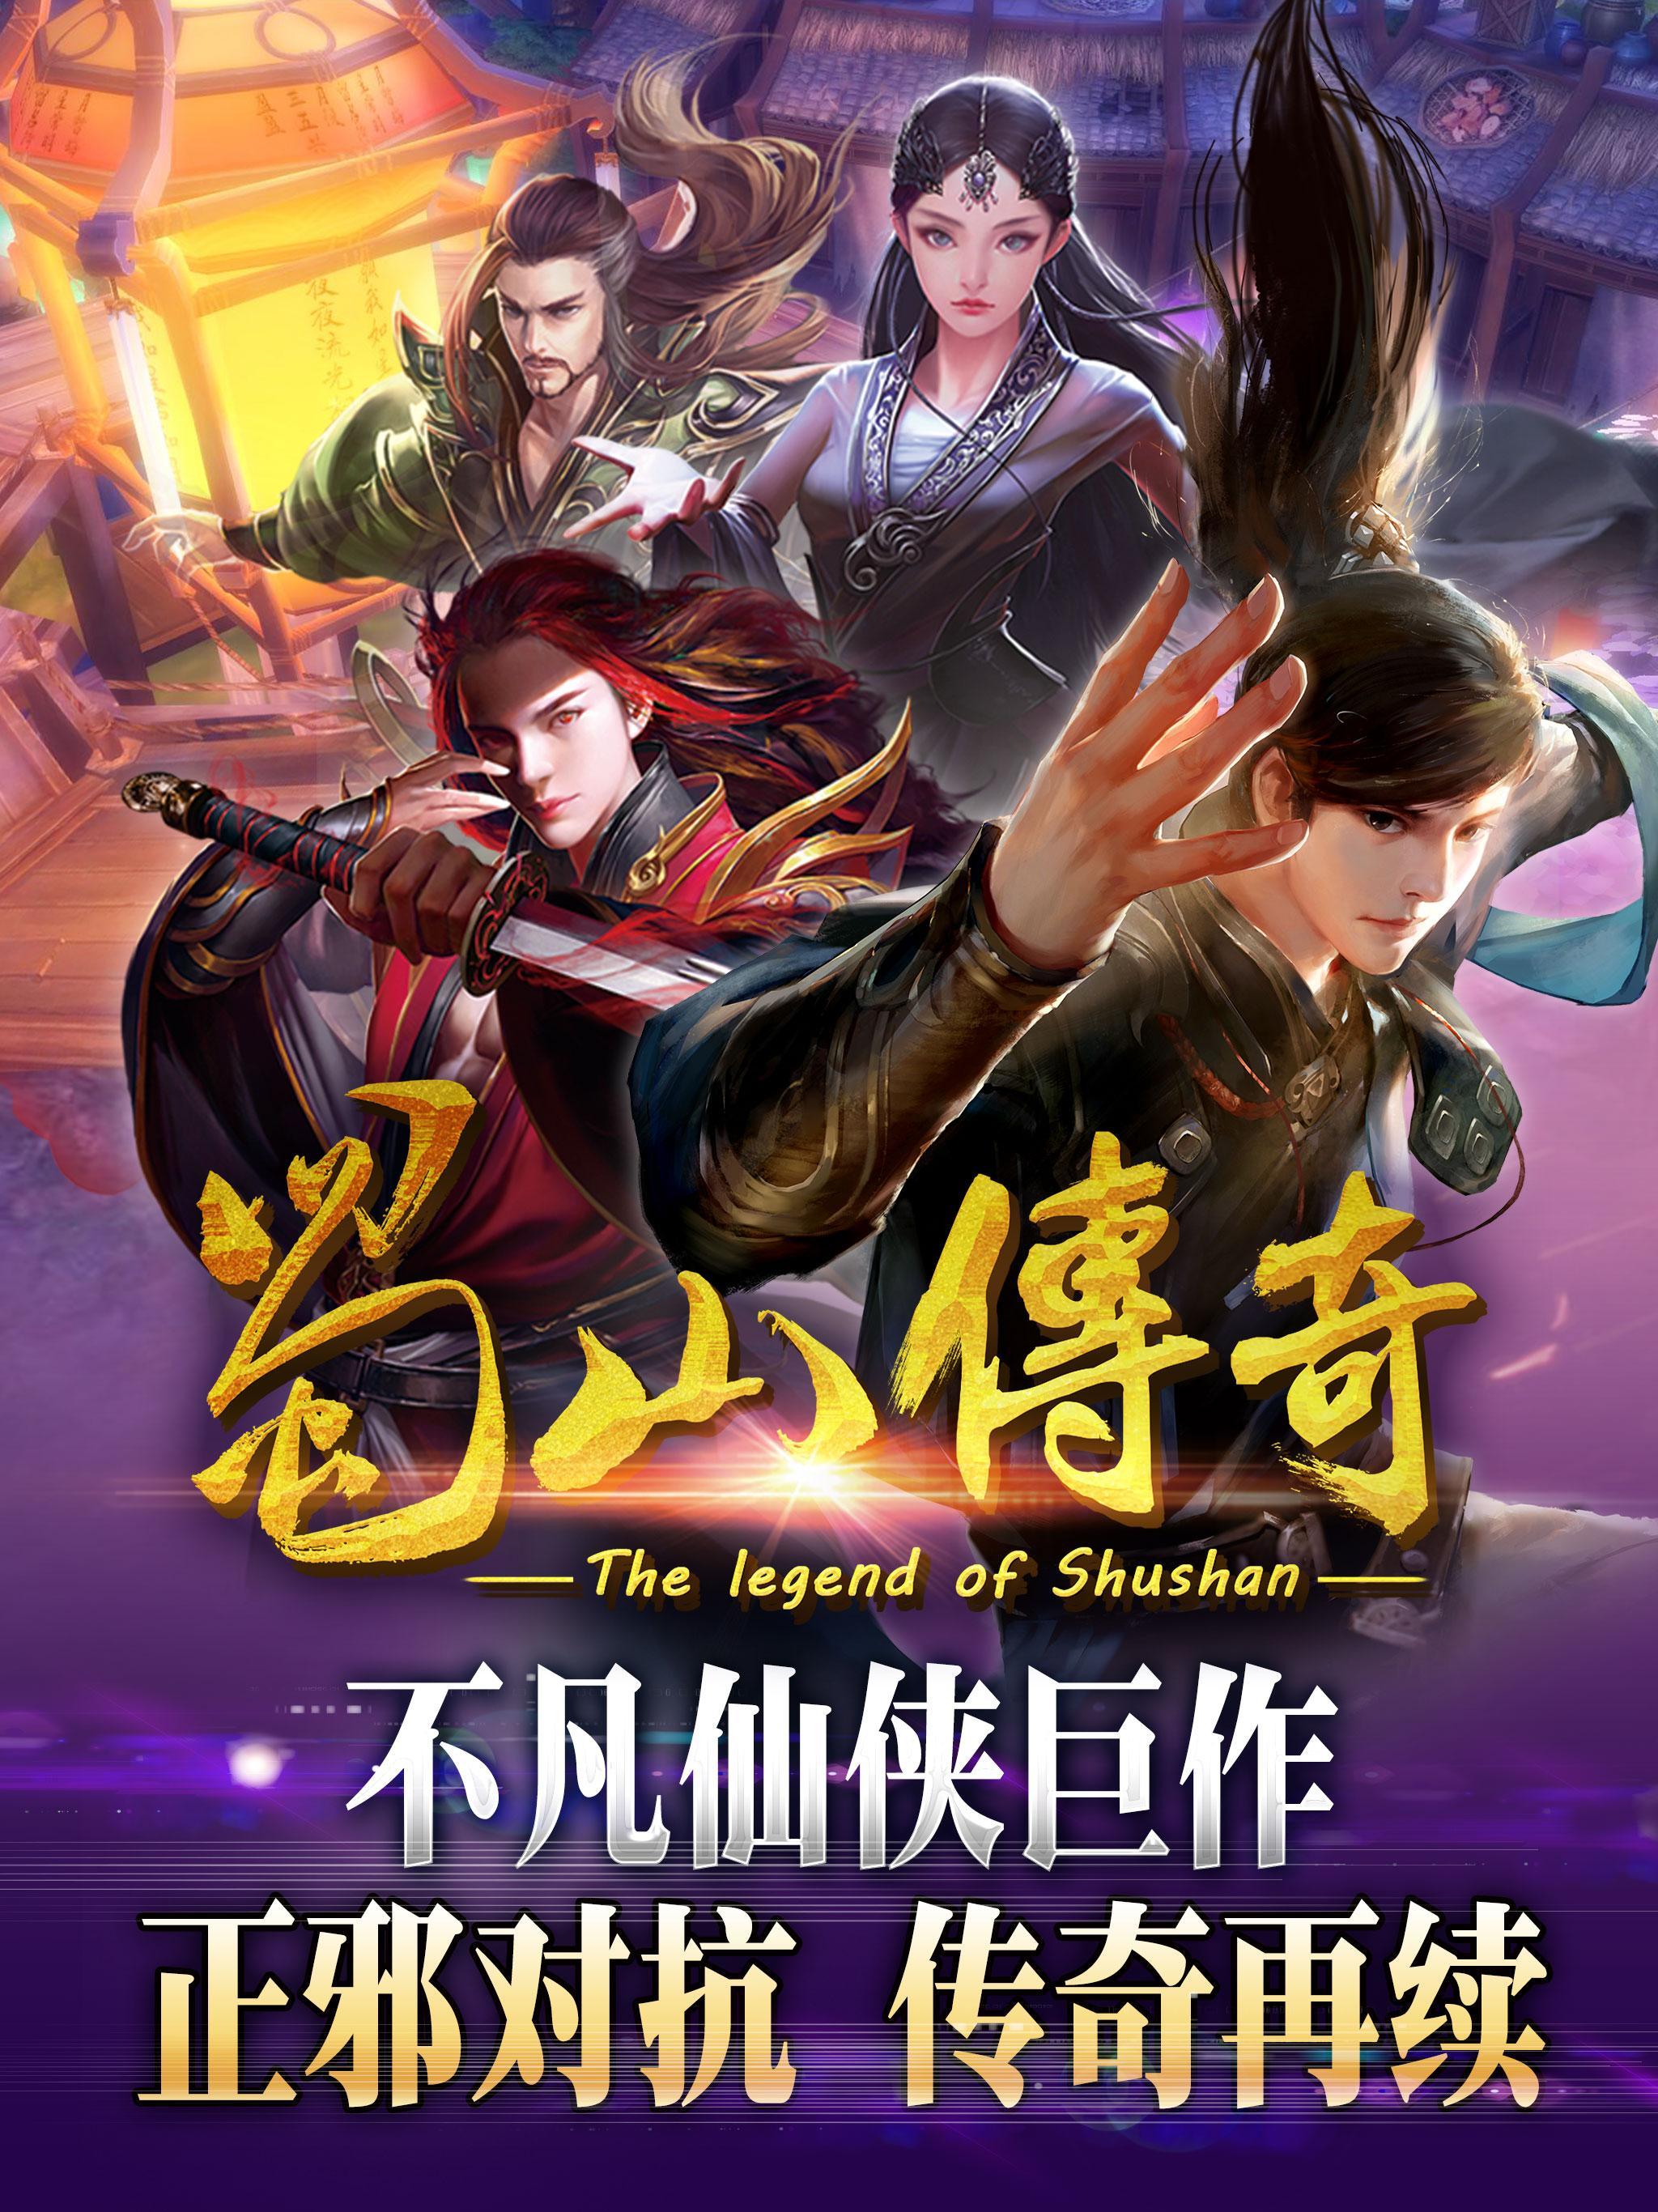 Screenshot 1 of Legenda Shushan (legenda shushan) 1.2.7